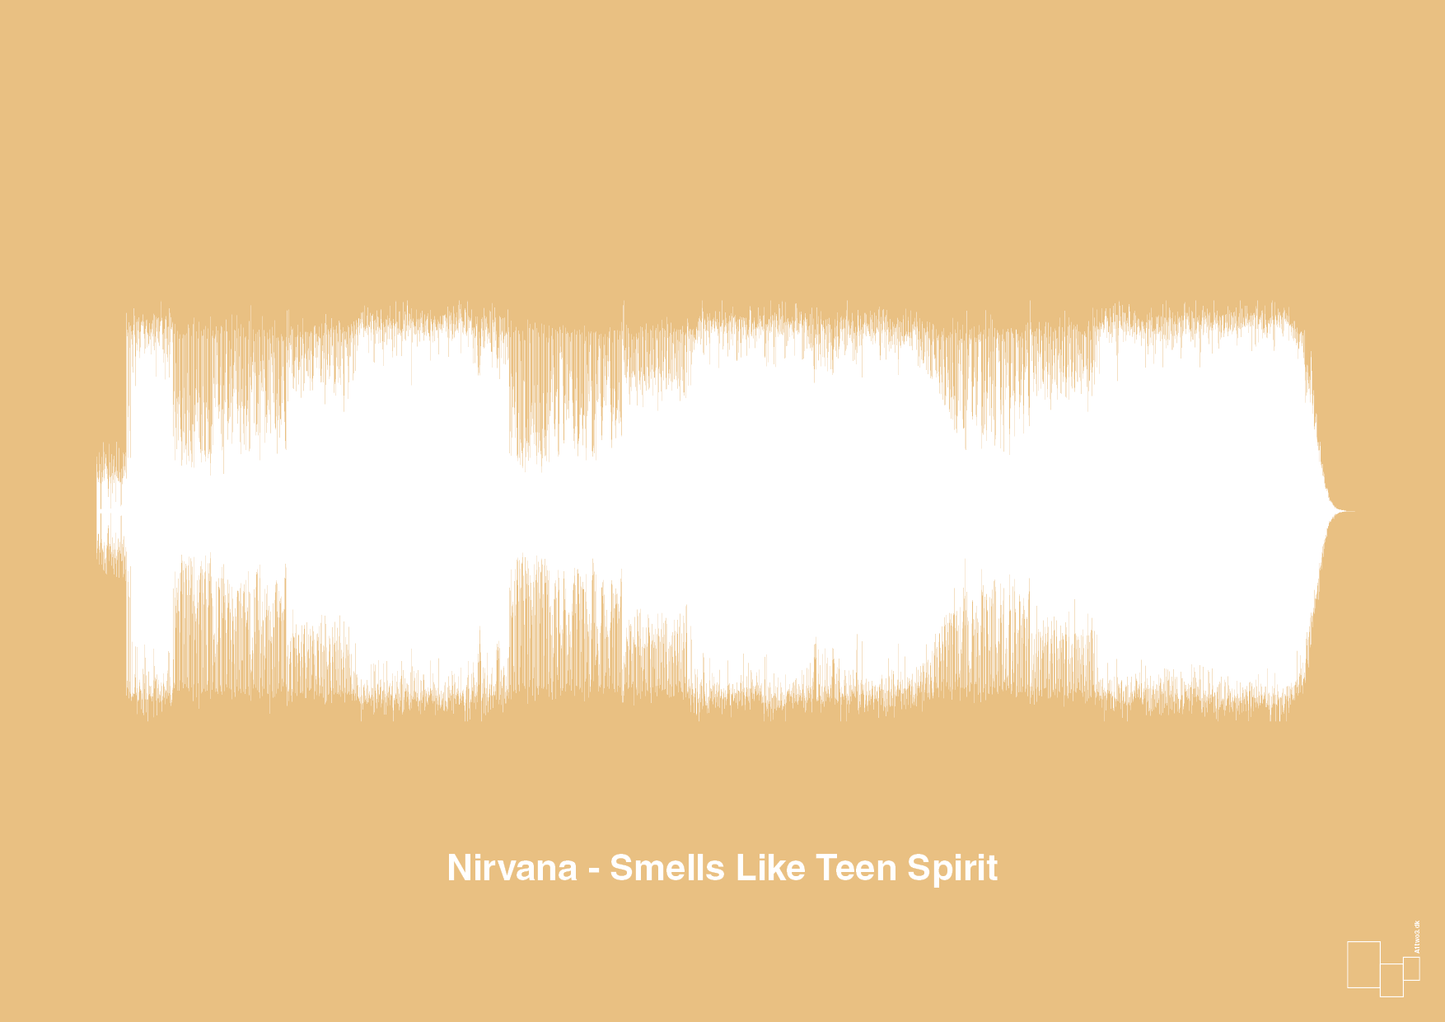 nirvana - smells like teen spirit - Plakat med Musik i Charismatic